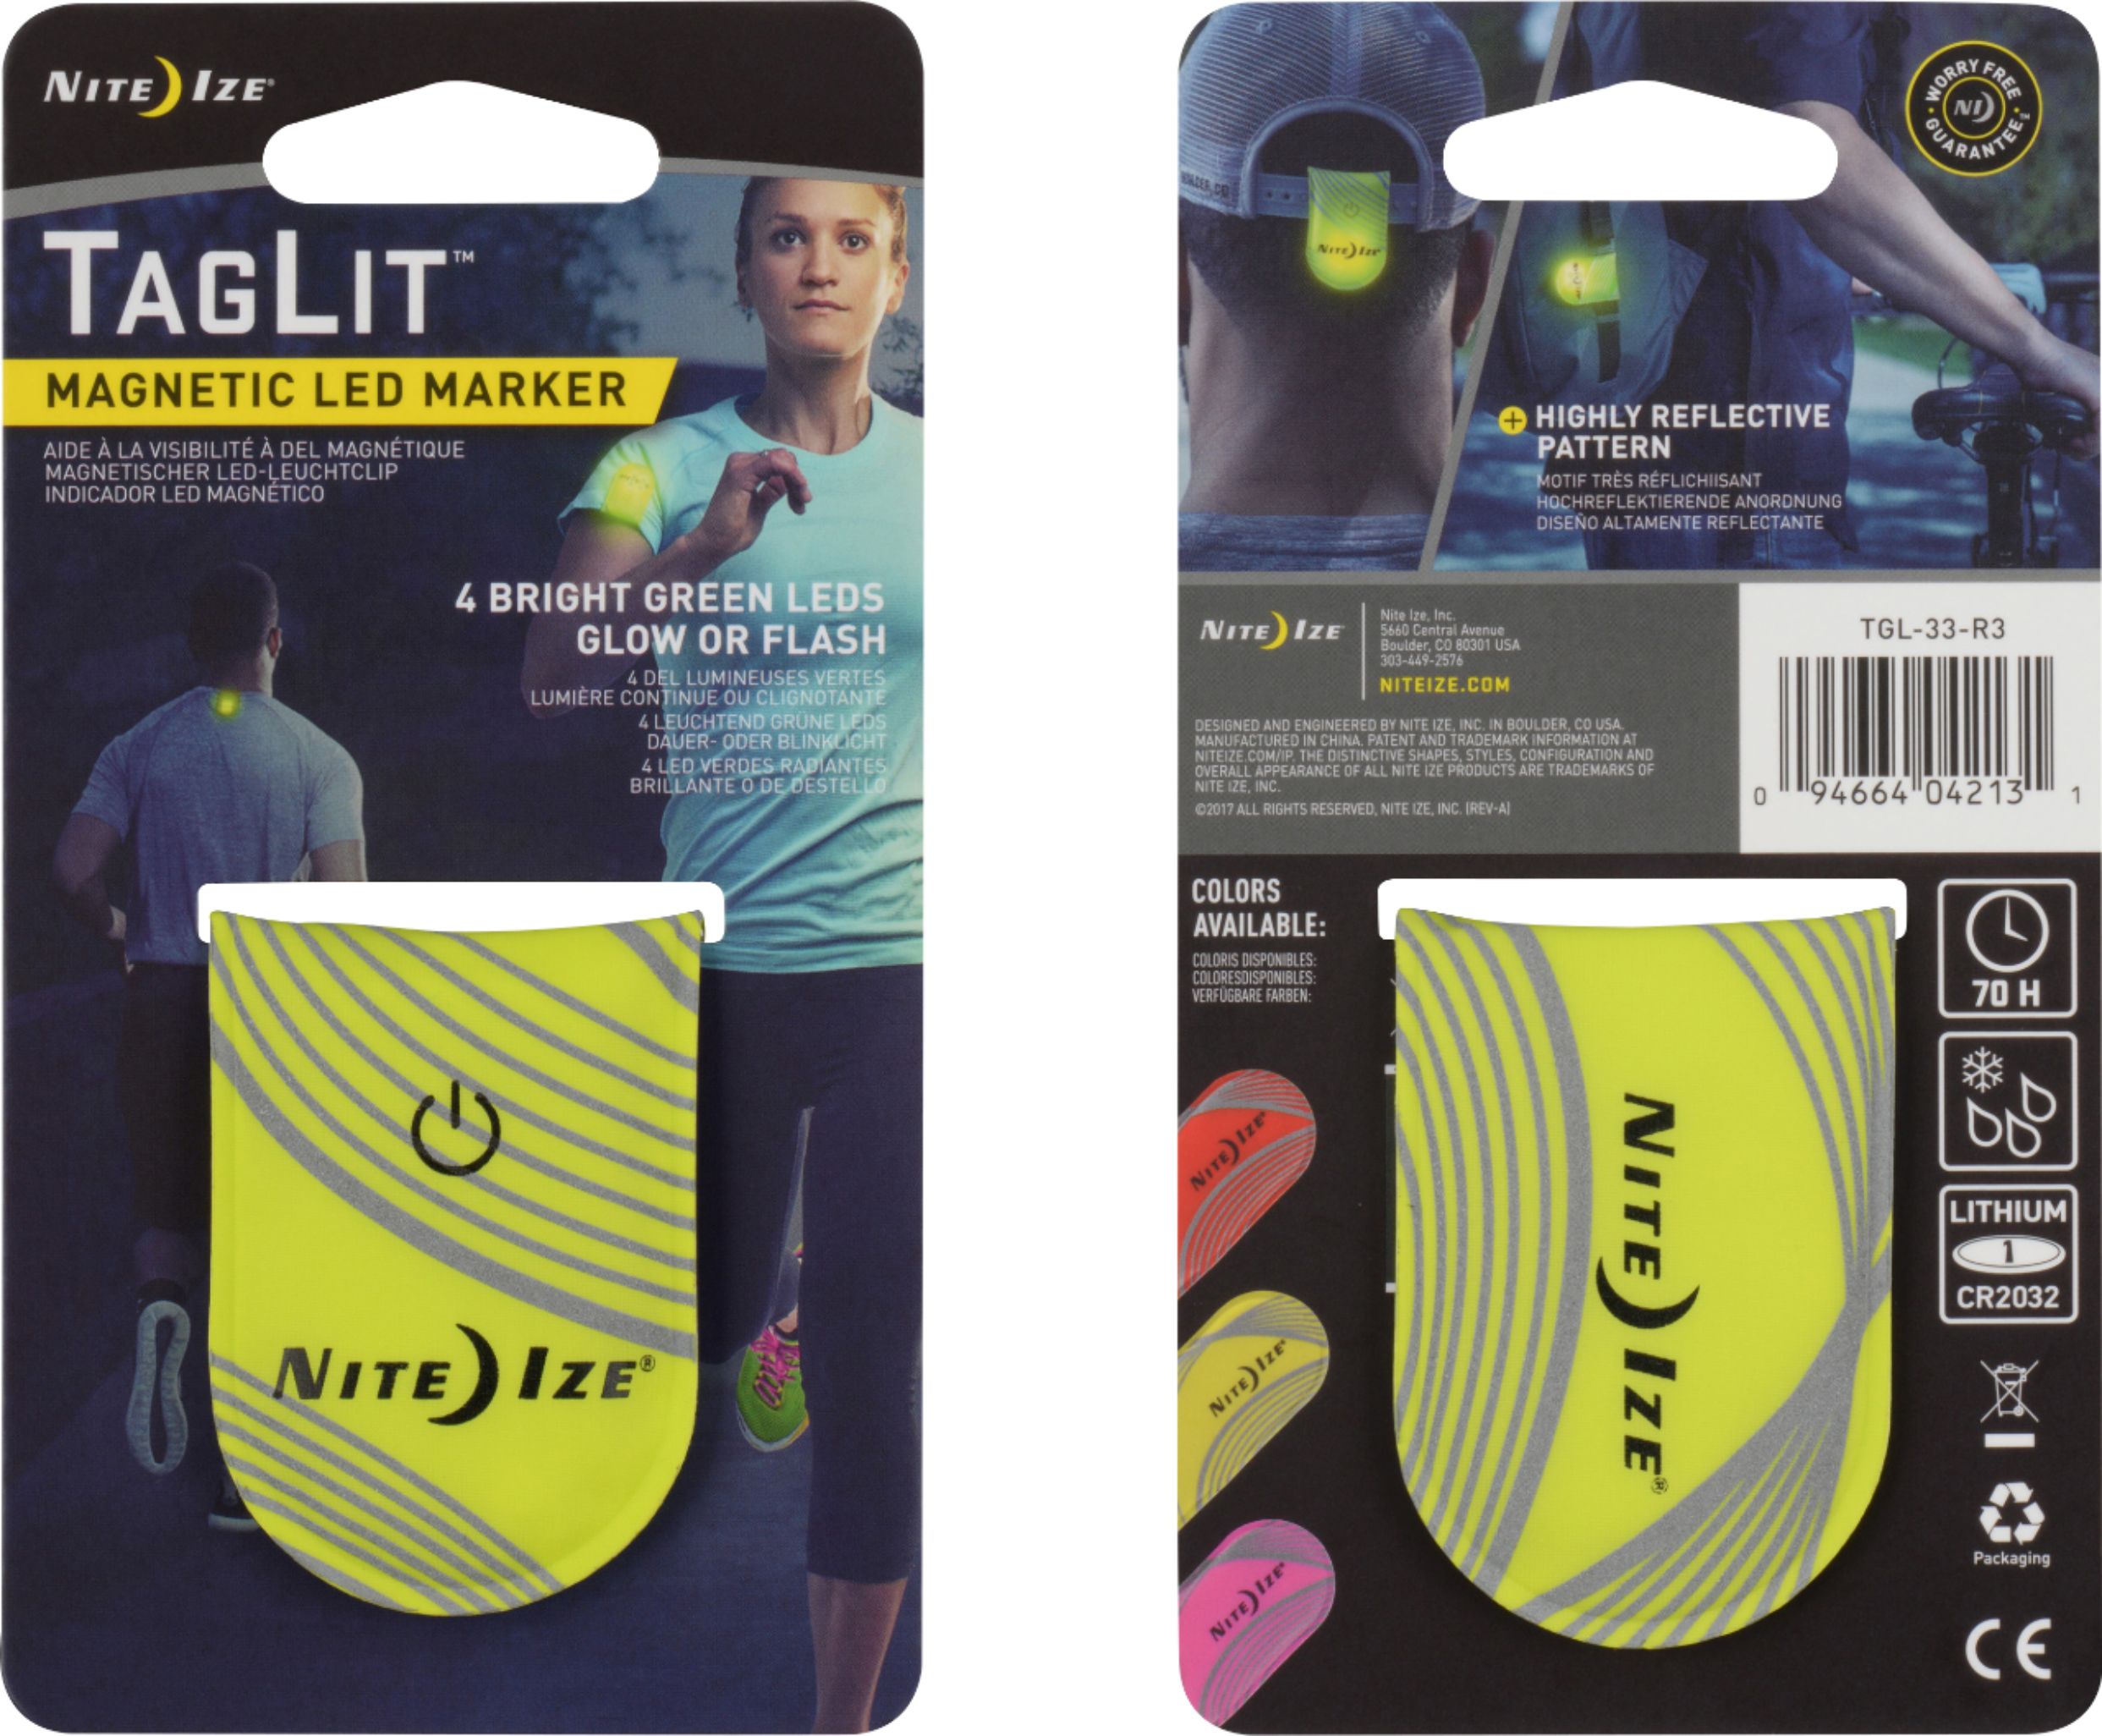 Best Buy: Nite Ize TagLit™ Magnetic LED Marker Neon Yellow TGL-33-R3